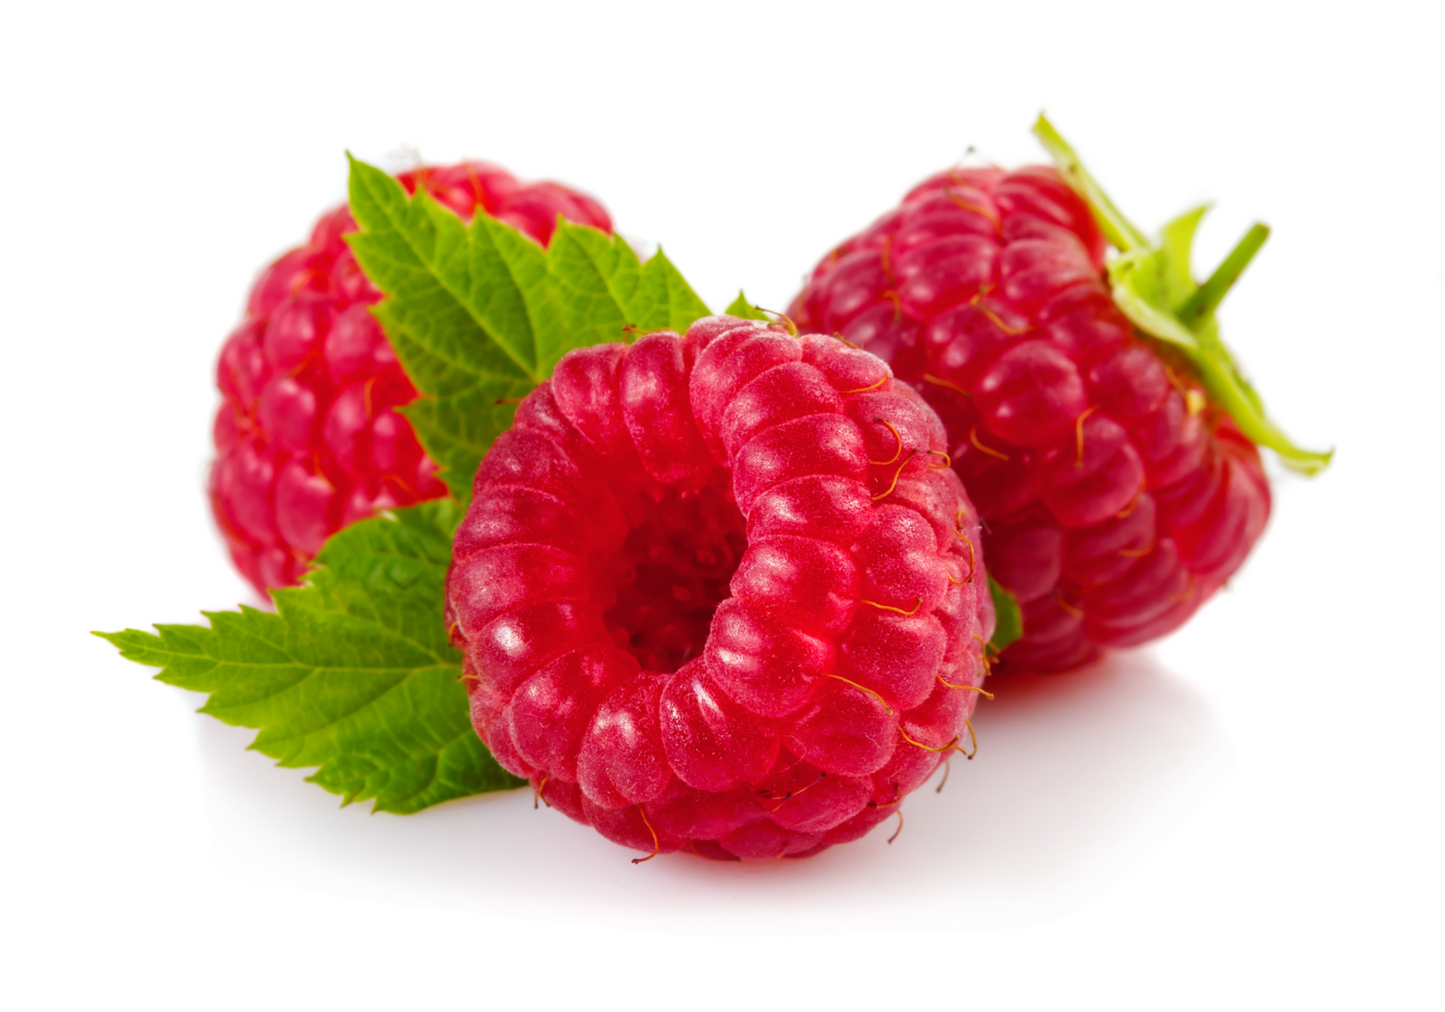 Fruit Plants - Raspberry 'Cascade Delight' - 1 x Full Plant in a 3 Litre Pot